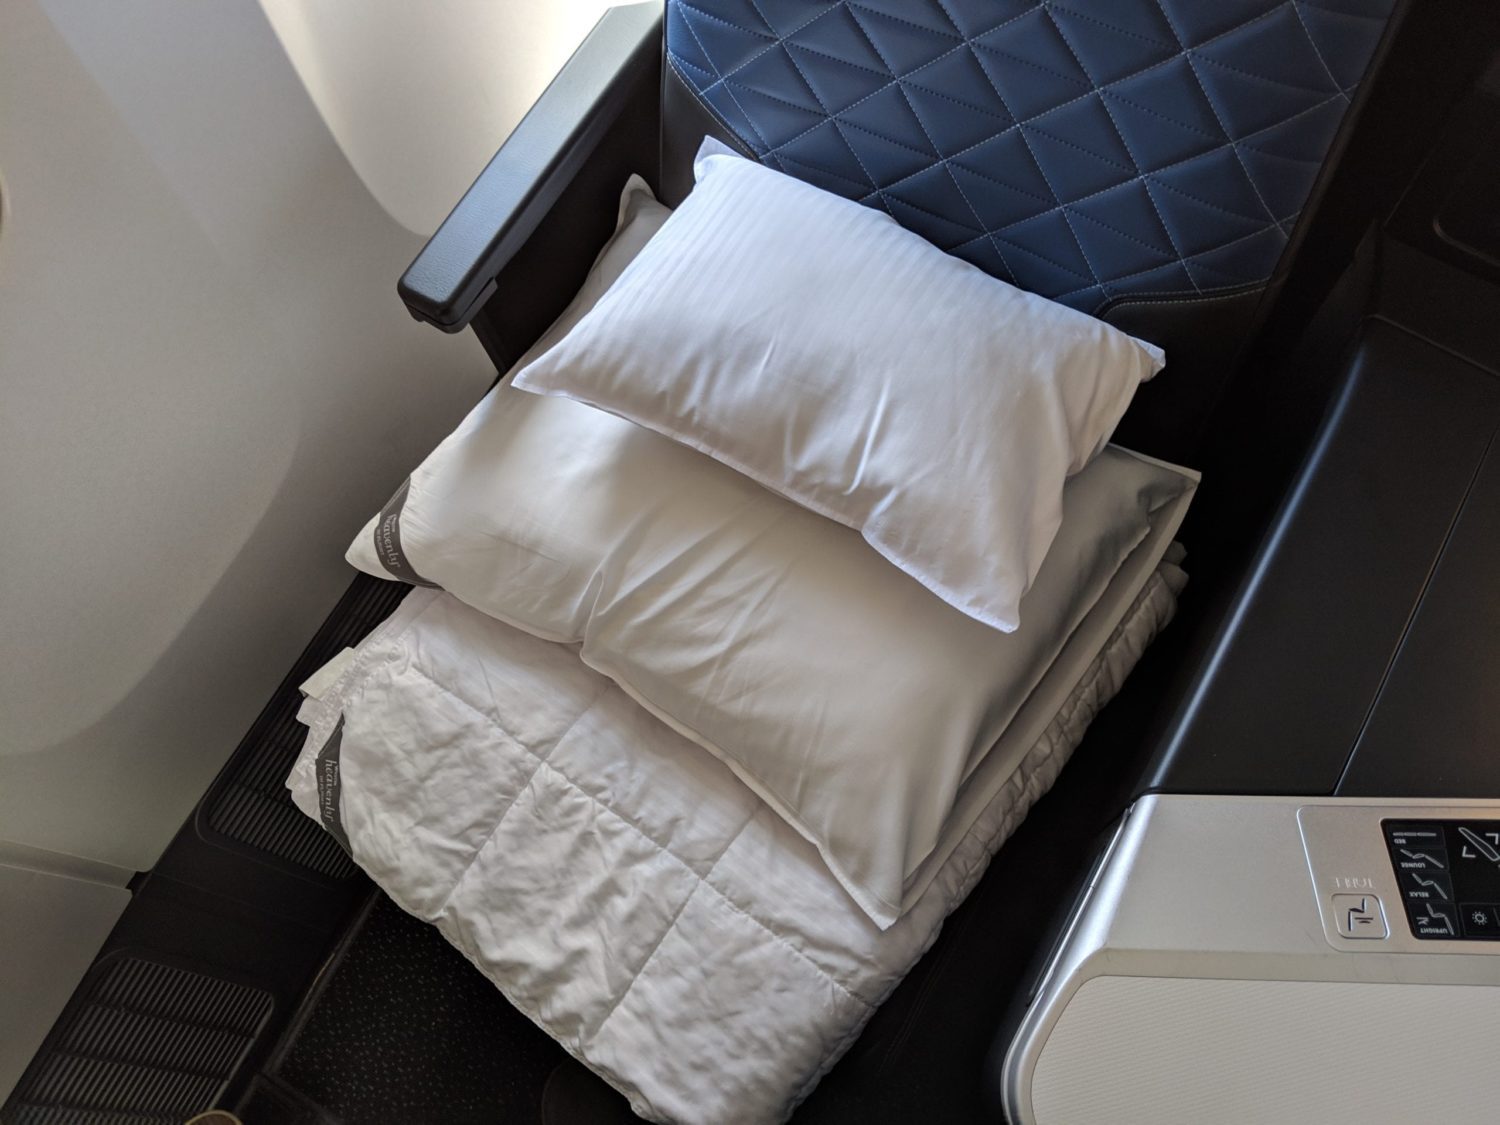 Delta One Suites Review bedding